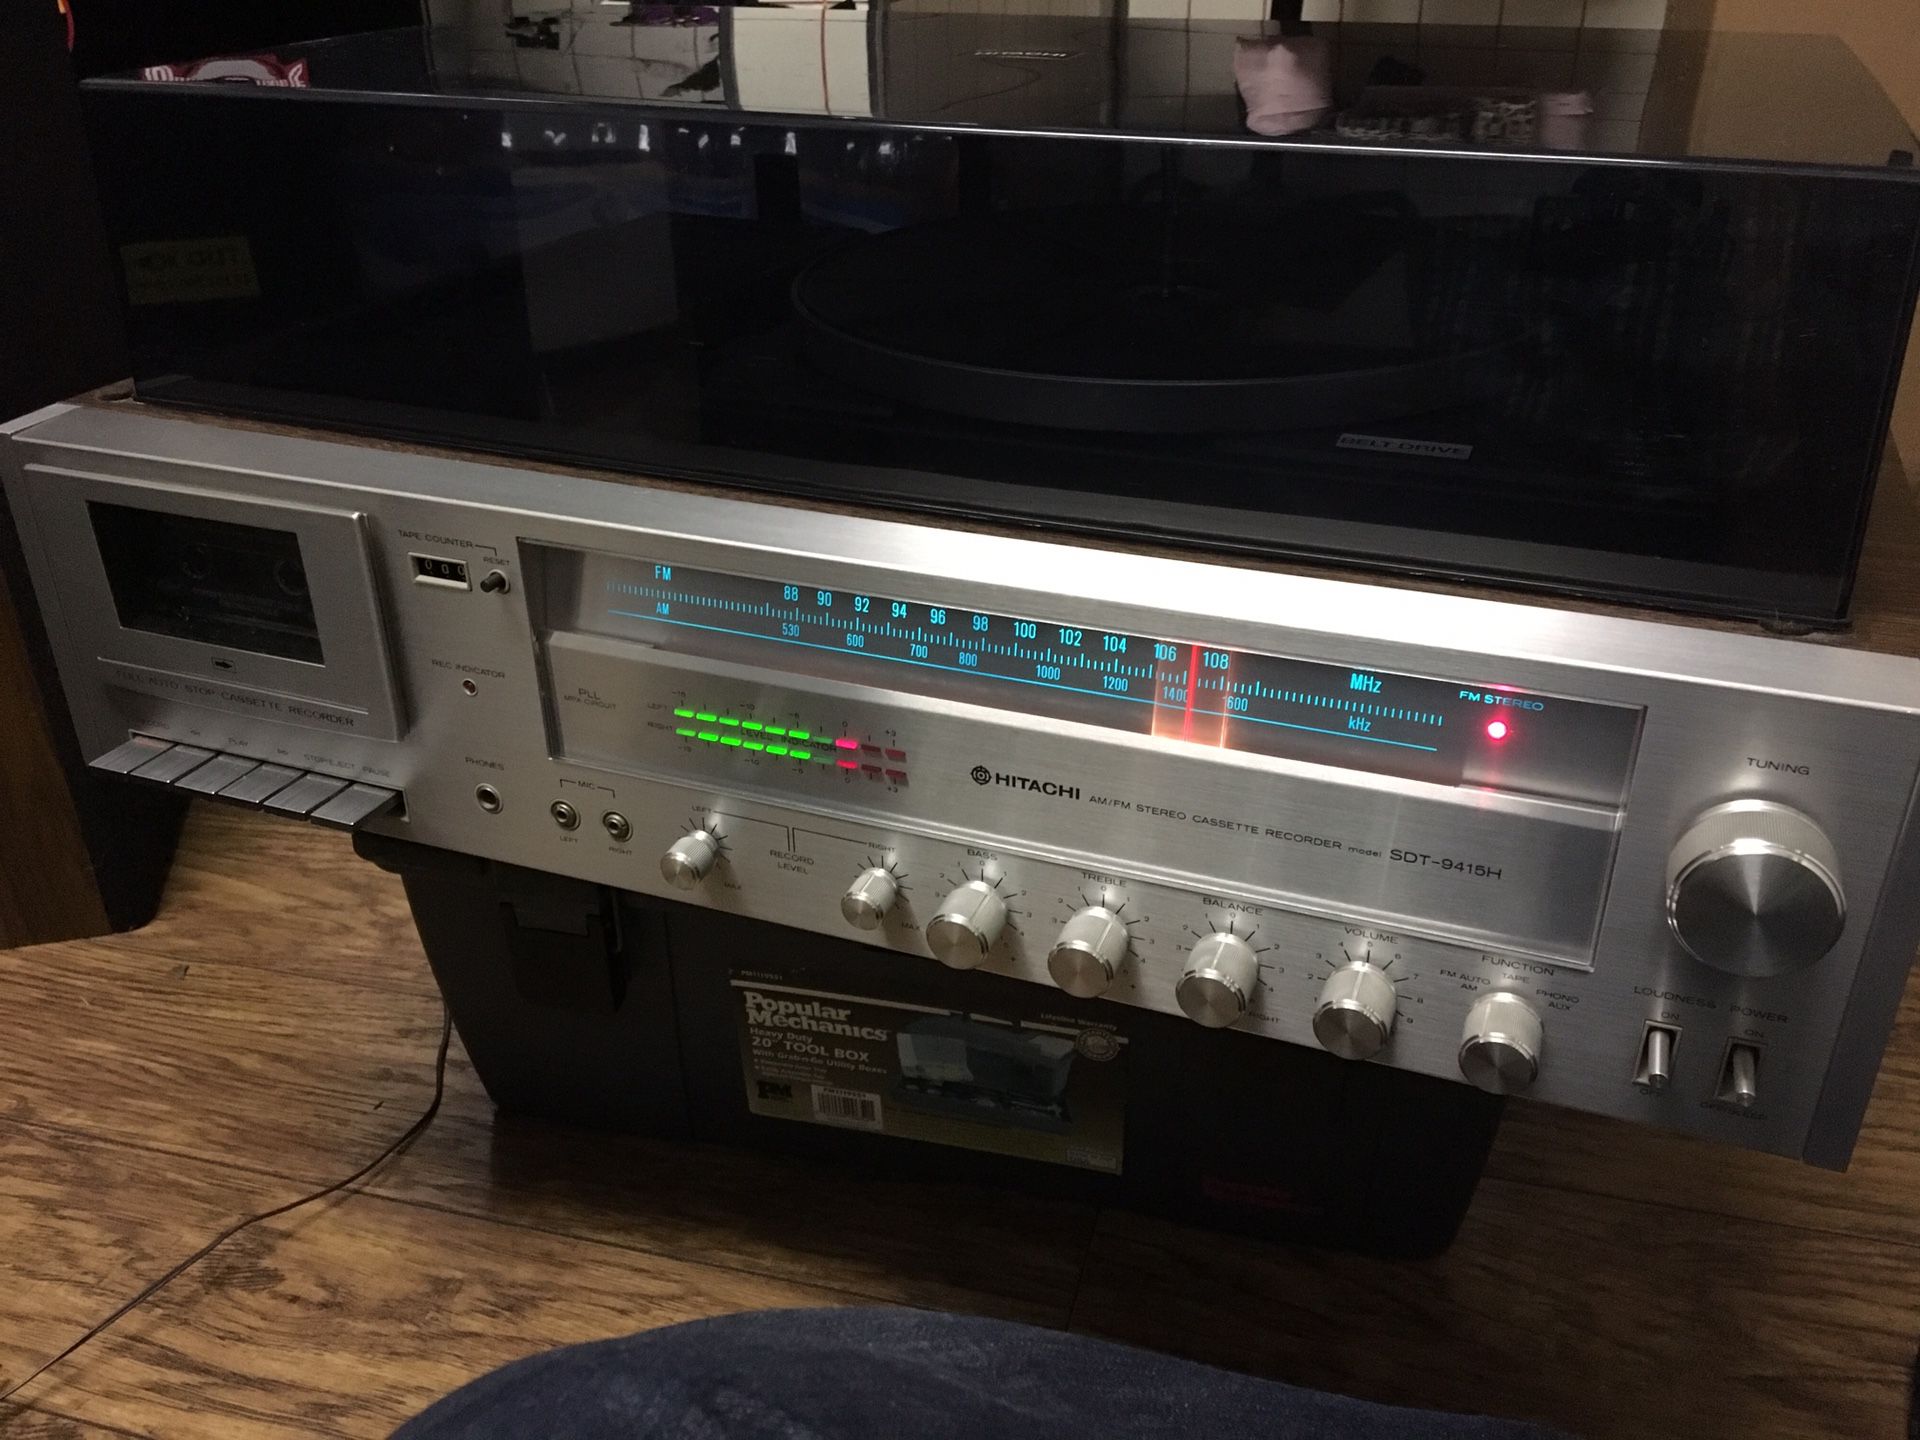 Hitachi SDT-9415H stereo,record player & 2 hitachi speakers.